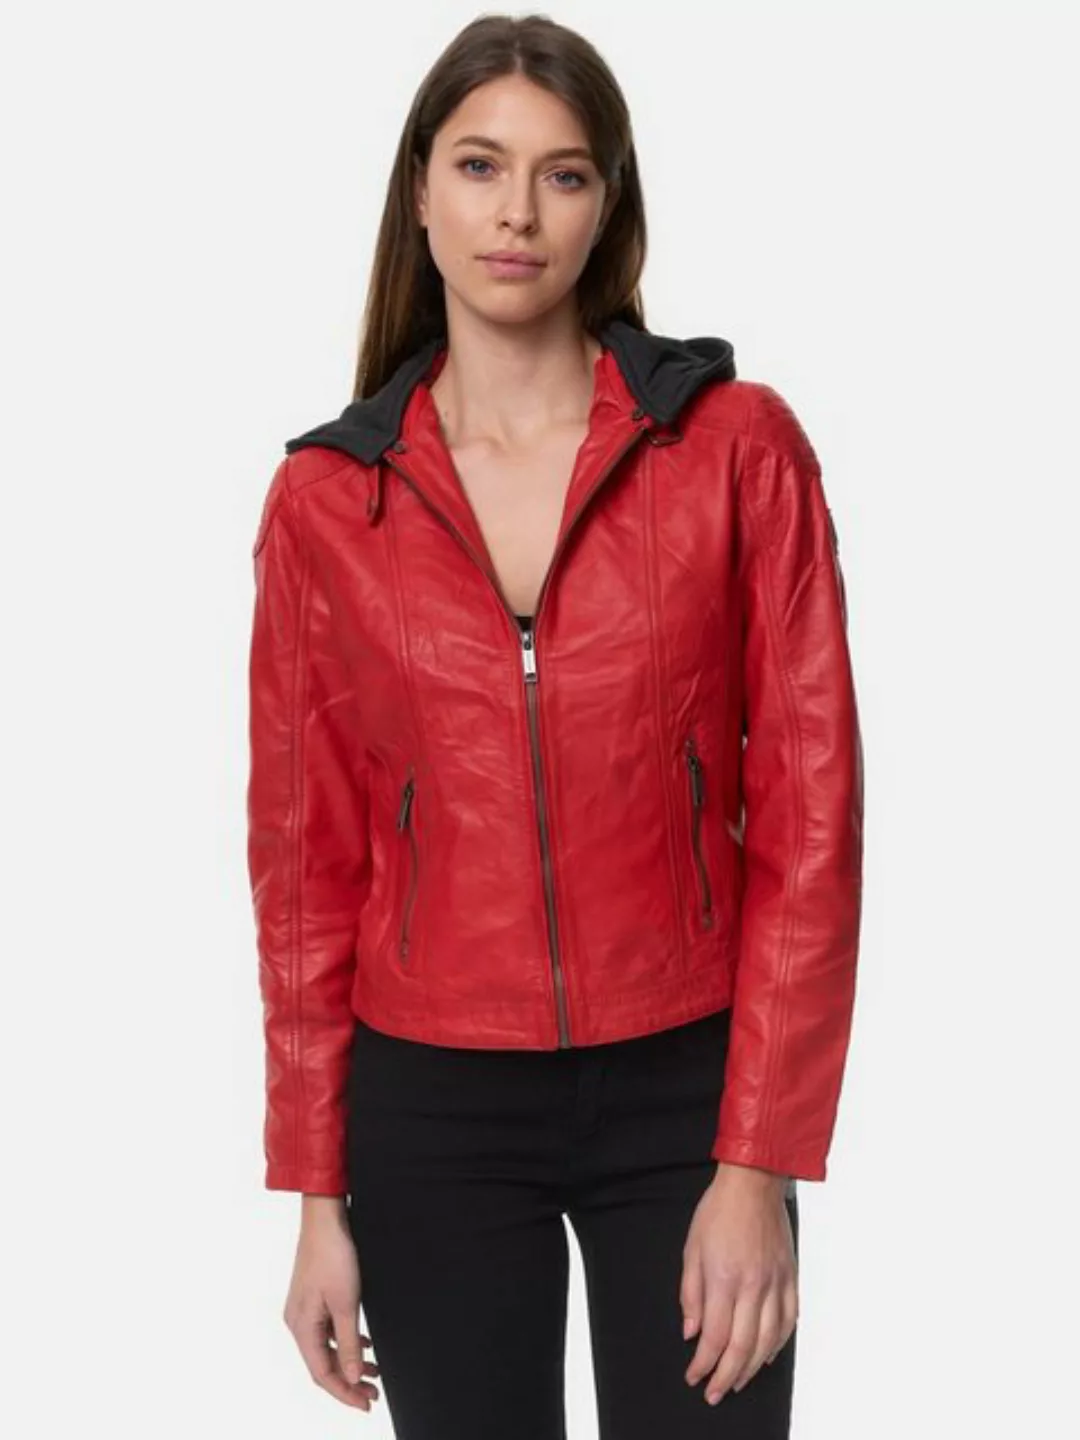 Tazzio Lederjacke F503 Damen Leder Jacke im Biker Look mit abnehmbarer Kapu günstig online kaufen